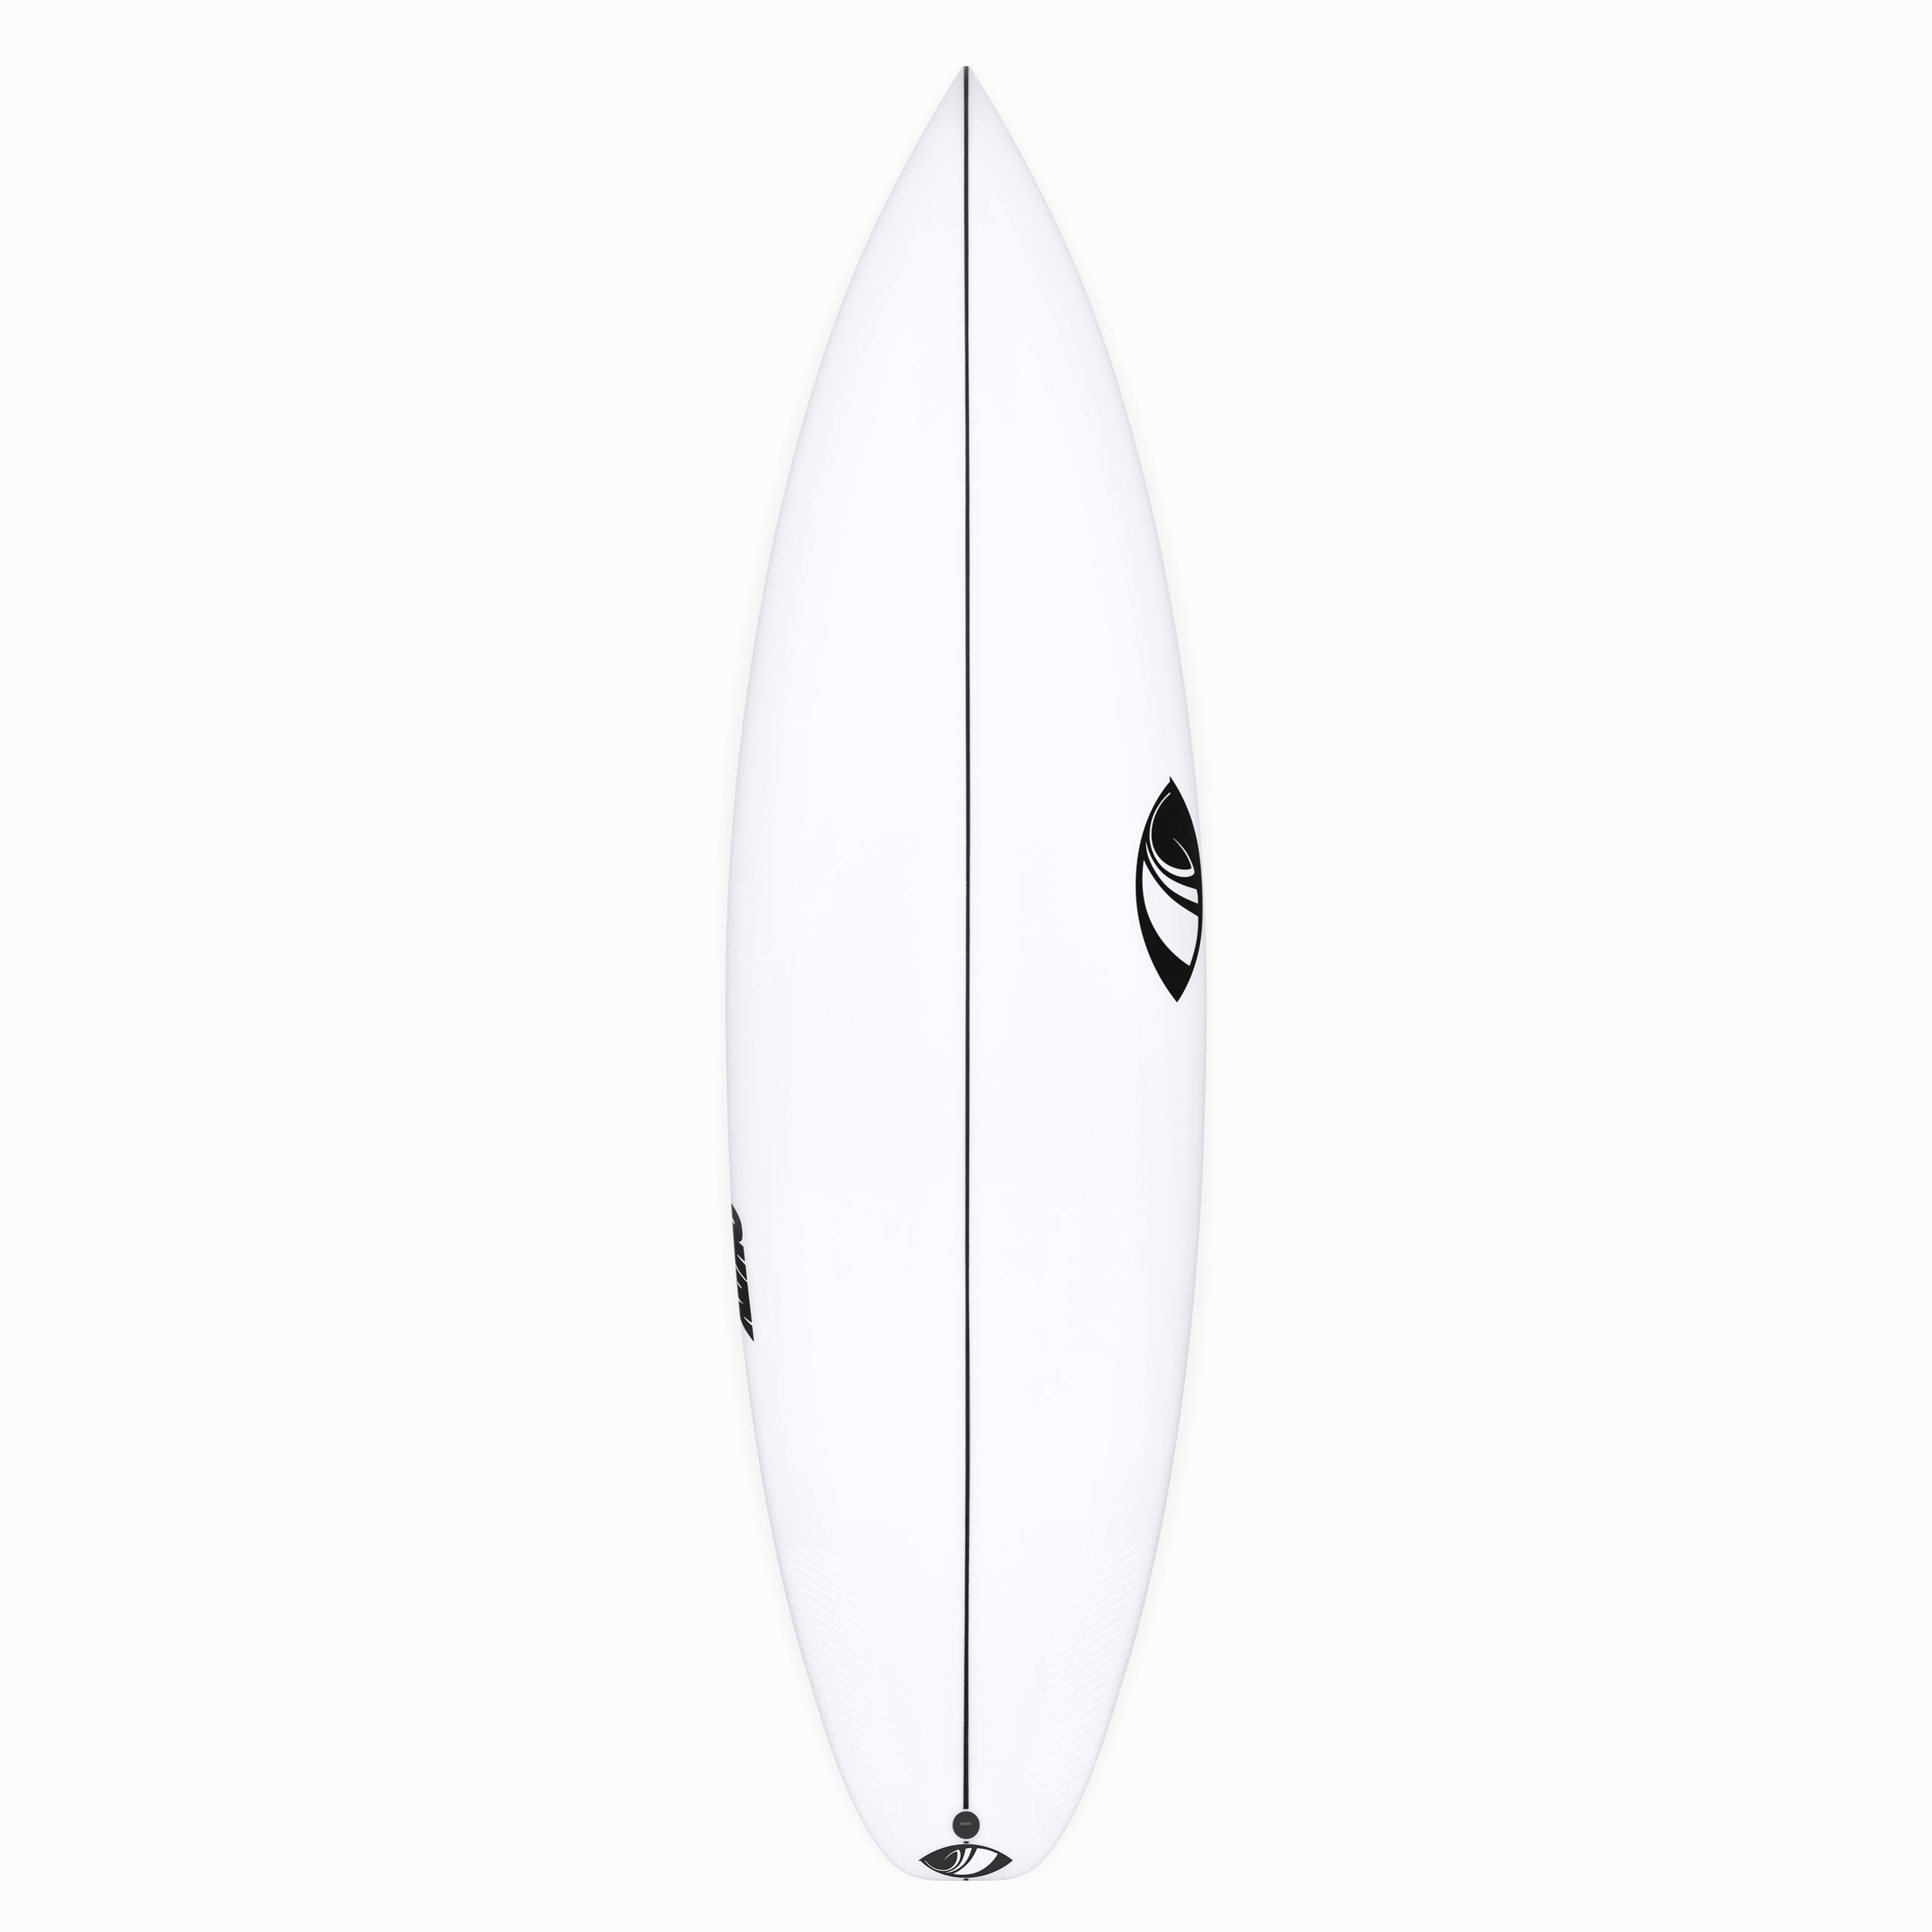 OKAY Surfboard | Sharp Eye Surfboards